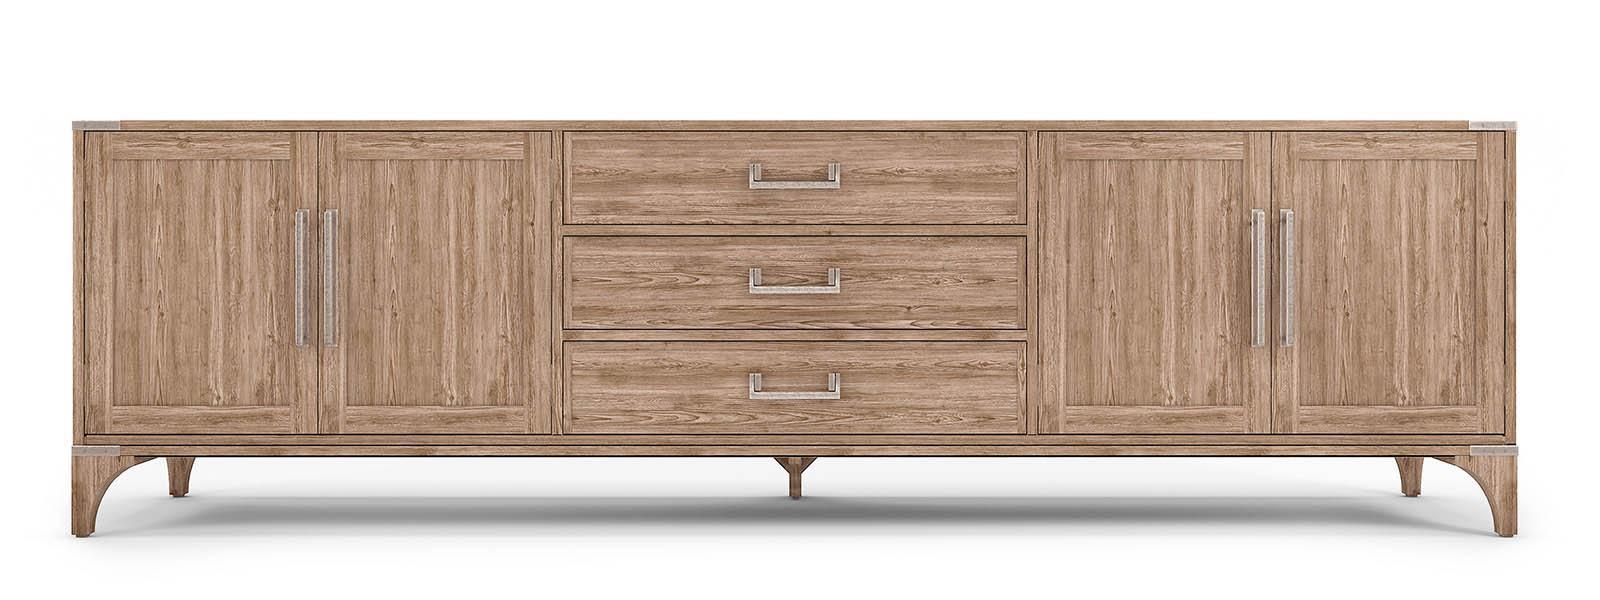 Furniture Passage Entertainment Cabinet in Light Oak